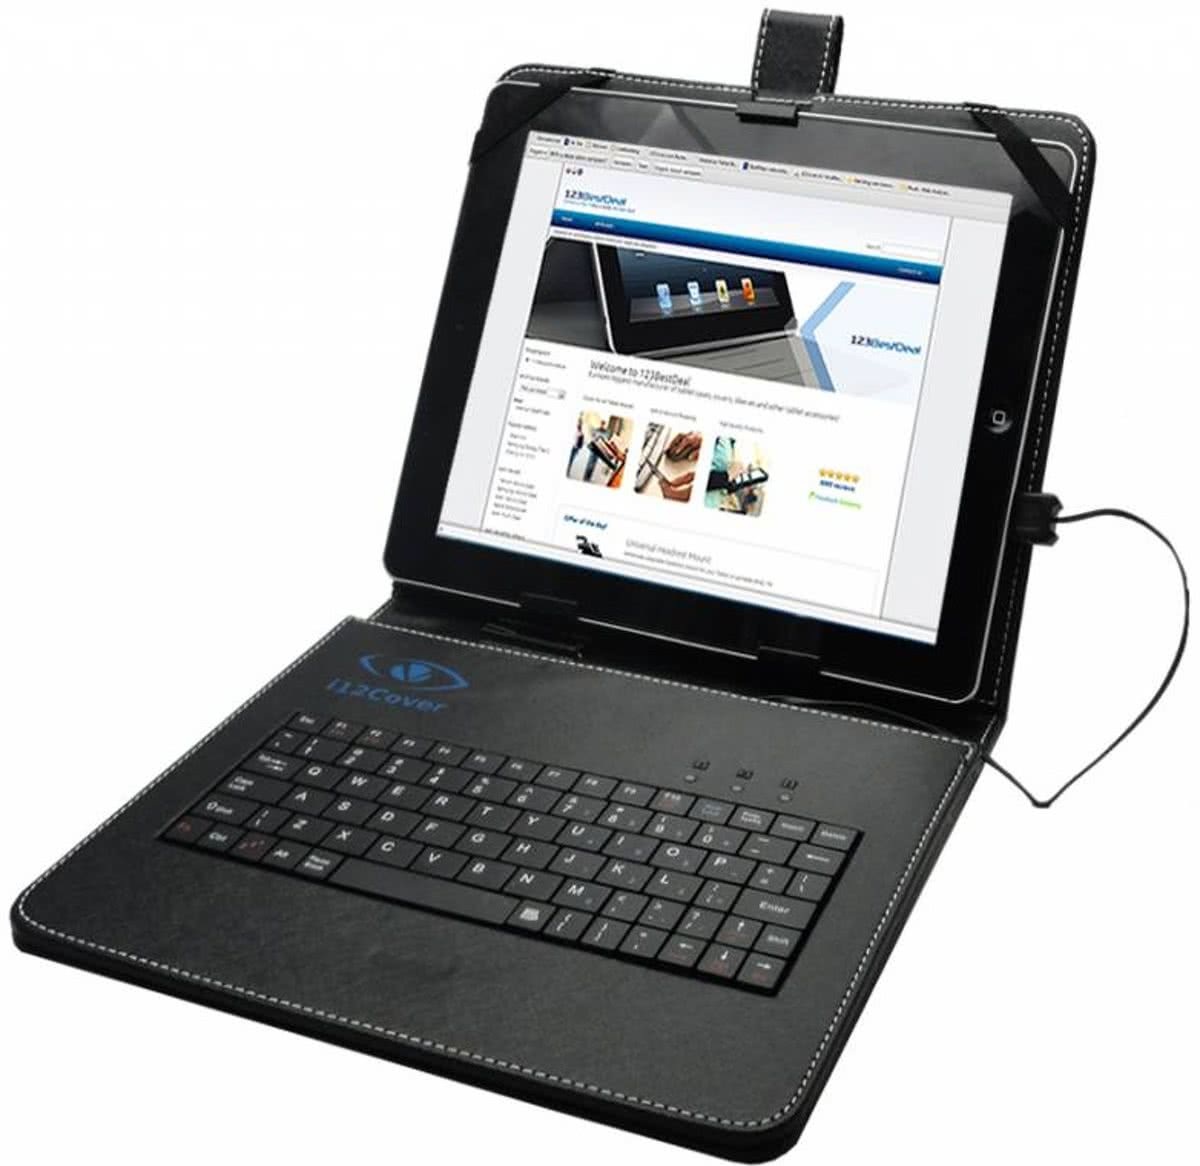 i12Cover Universeel 9,7 Inch Keyboard Case, Hoes met ingebouwd QWERTY toetsenbord, Zwart, merk Betaalbare universele keyboard case voor een 9.7 inch tablet. De cover is gemaakt van PU leer met ingebouwd toetsenbord